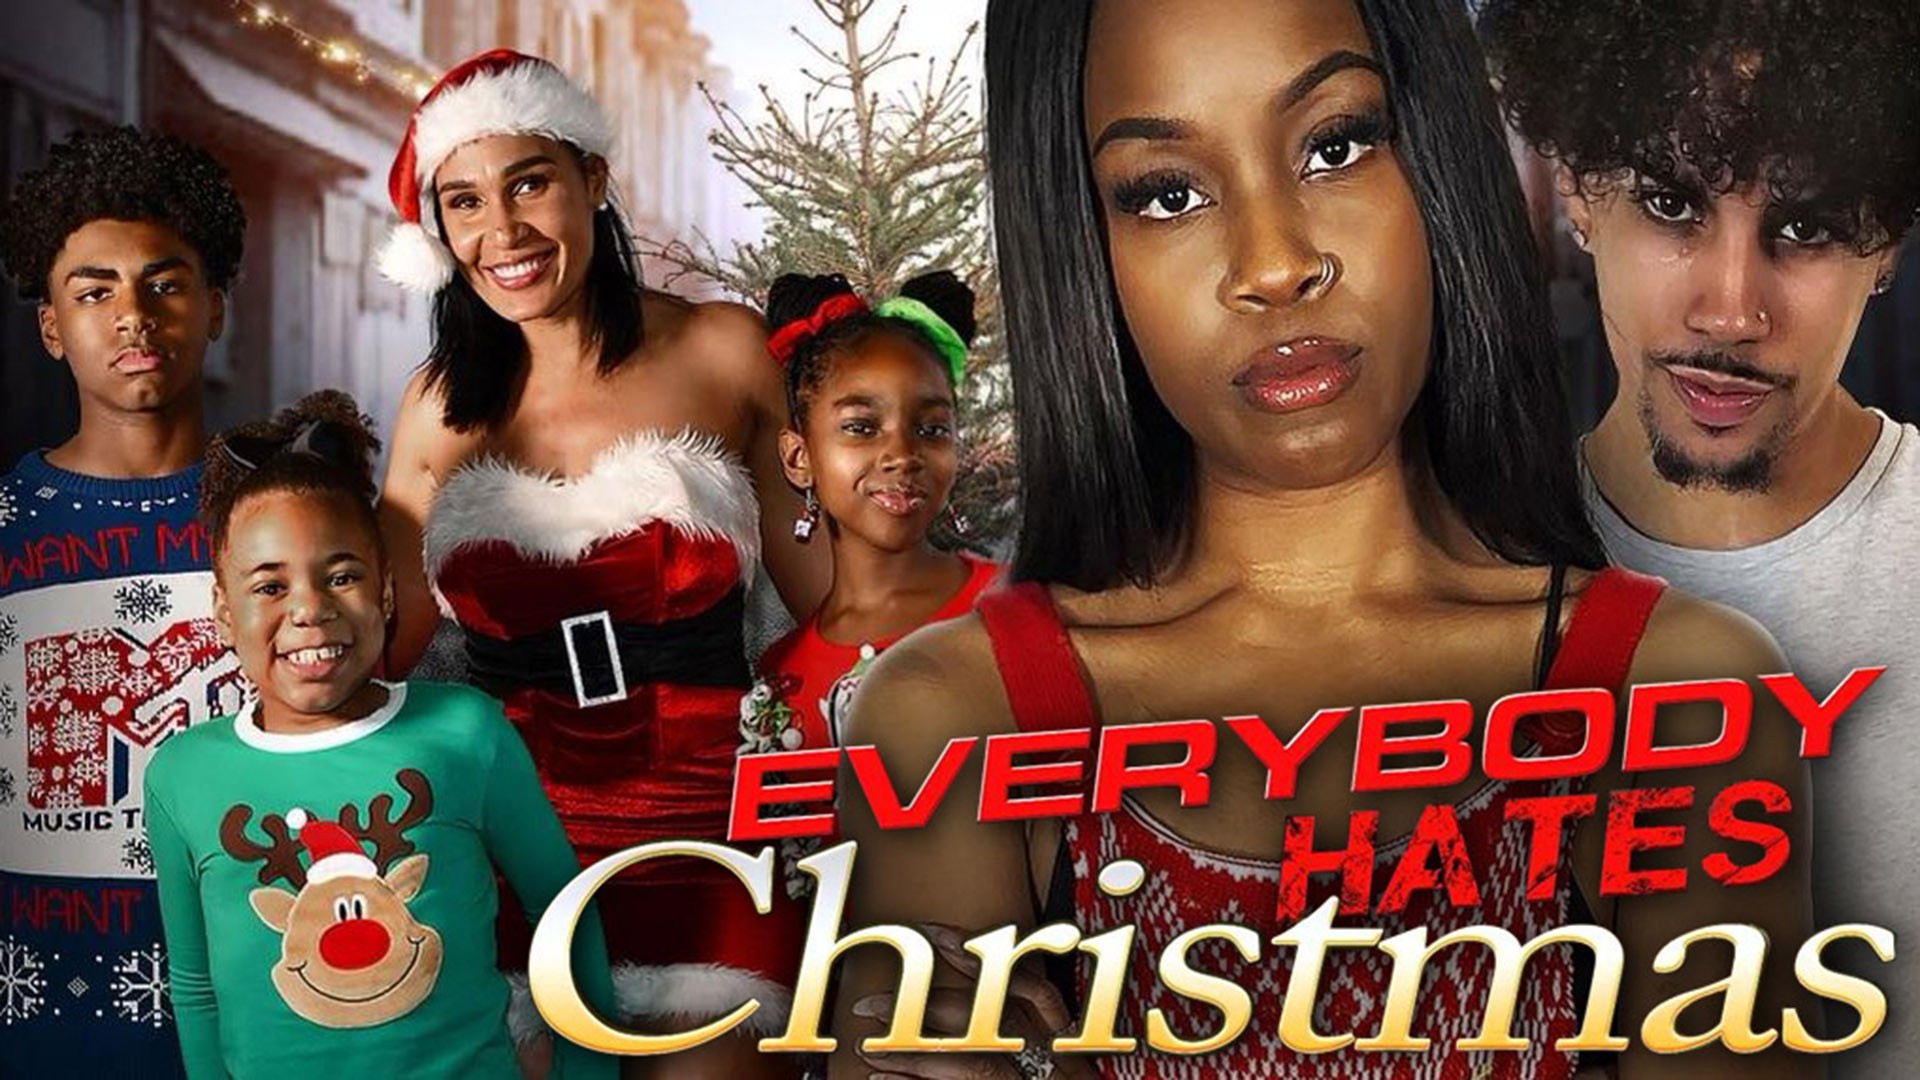 Soundtrack Album for Netflix's 'I Hate Christmas' Released